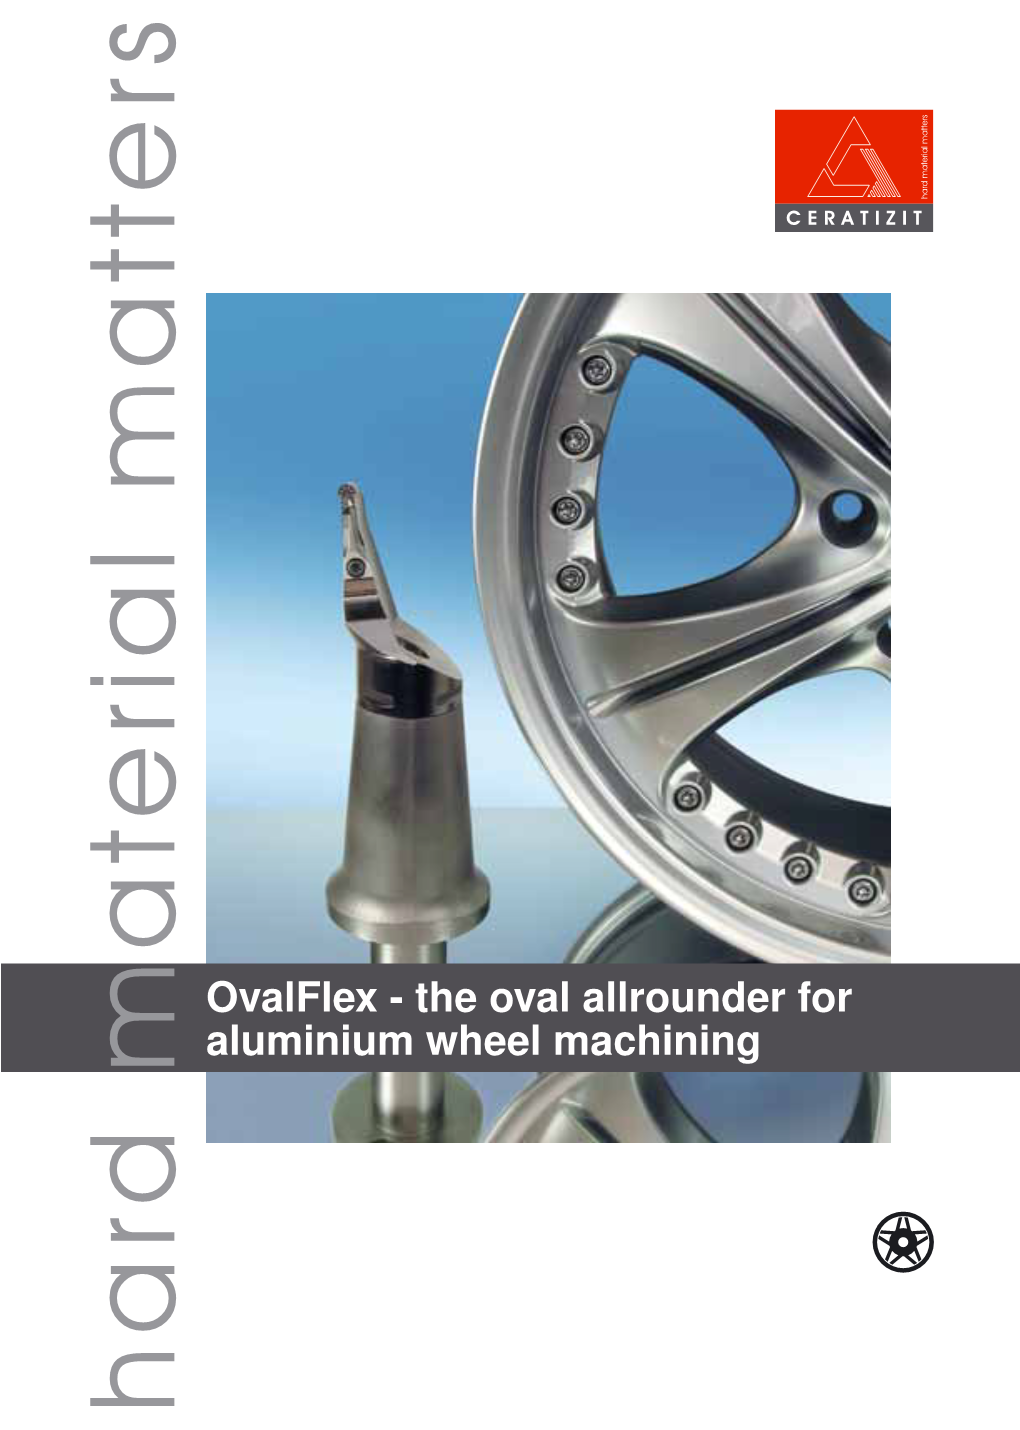 Ovalflex - the Oval Allrounder for Aluminium Wheel Machining CERATIZIT - the Parent Companies